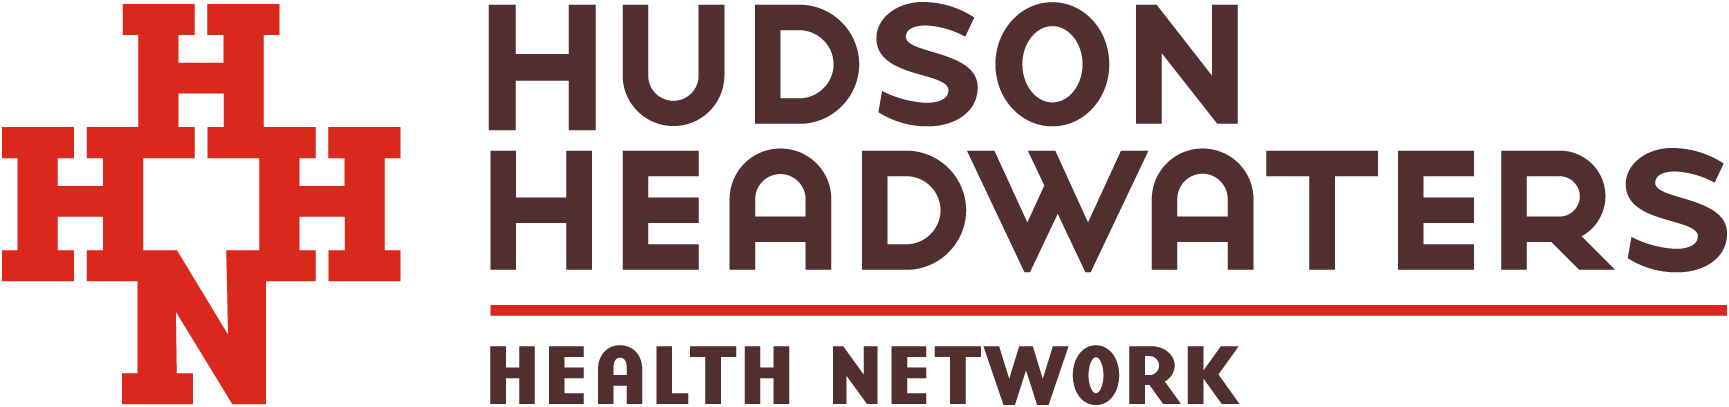 Hudson Headwaters Health Network